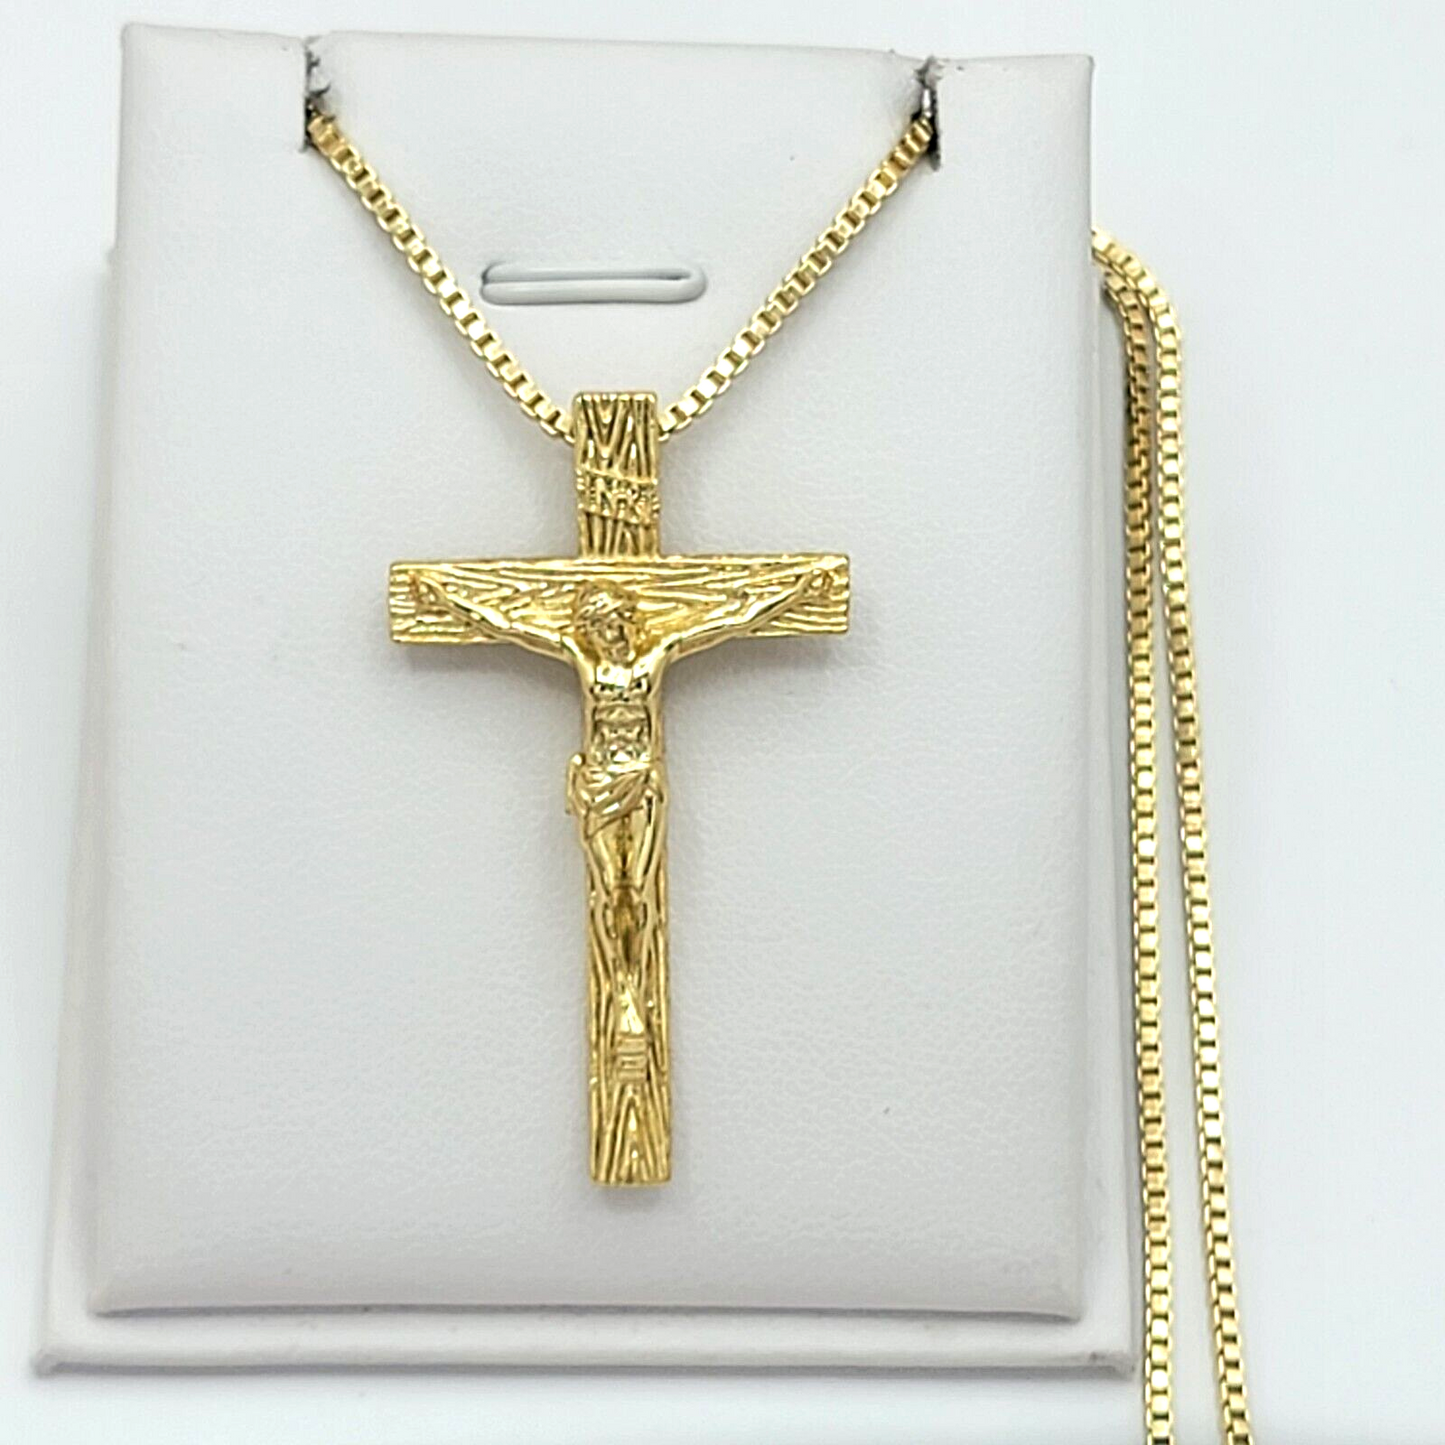 Necklaces - 14K Gold Plated. Jesus Christ Crucifix Cross Pendant & Chain.